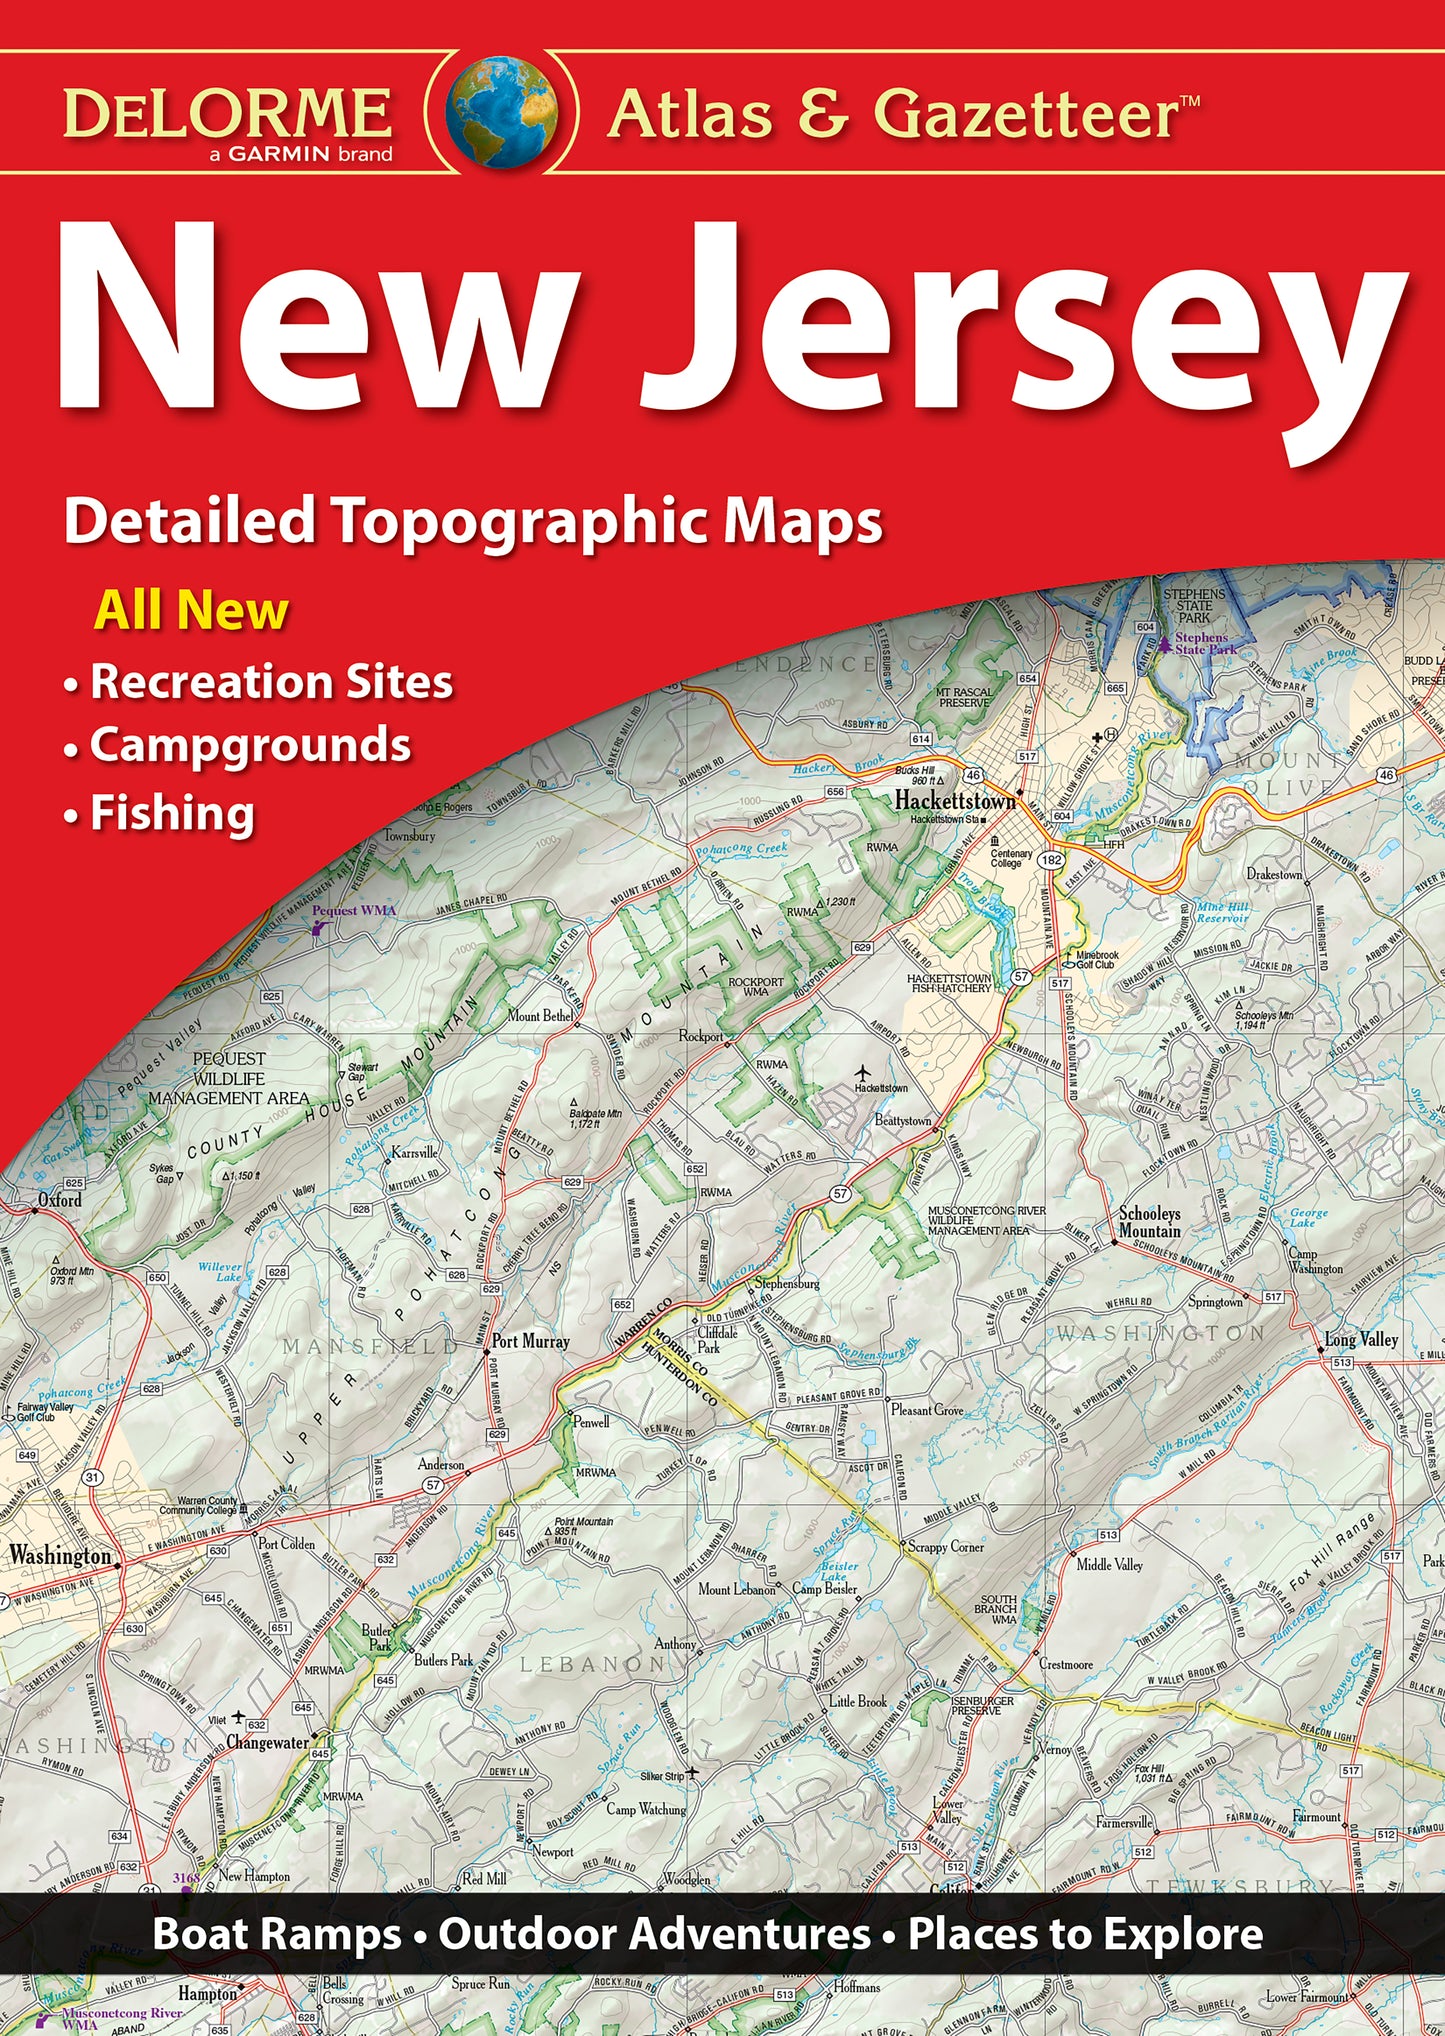 DeLorme Atlas and Gazetteer New Jersey